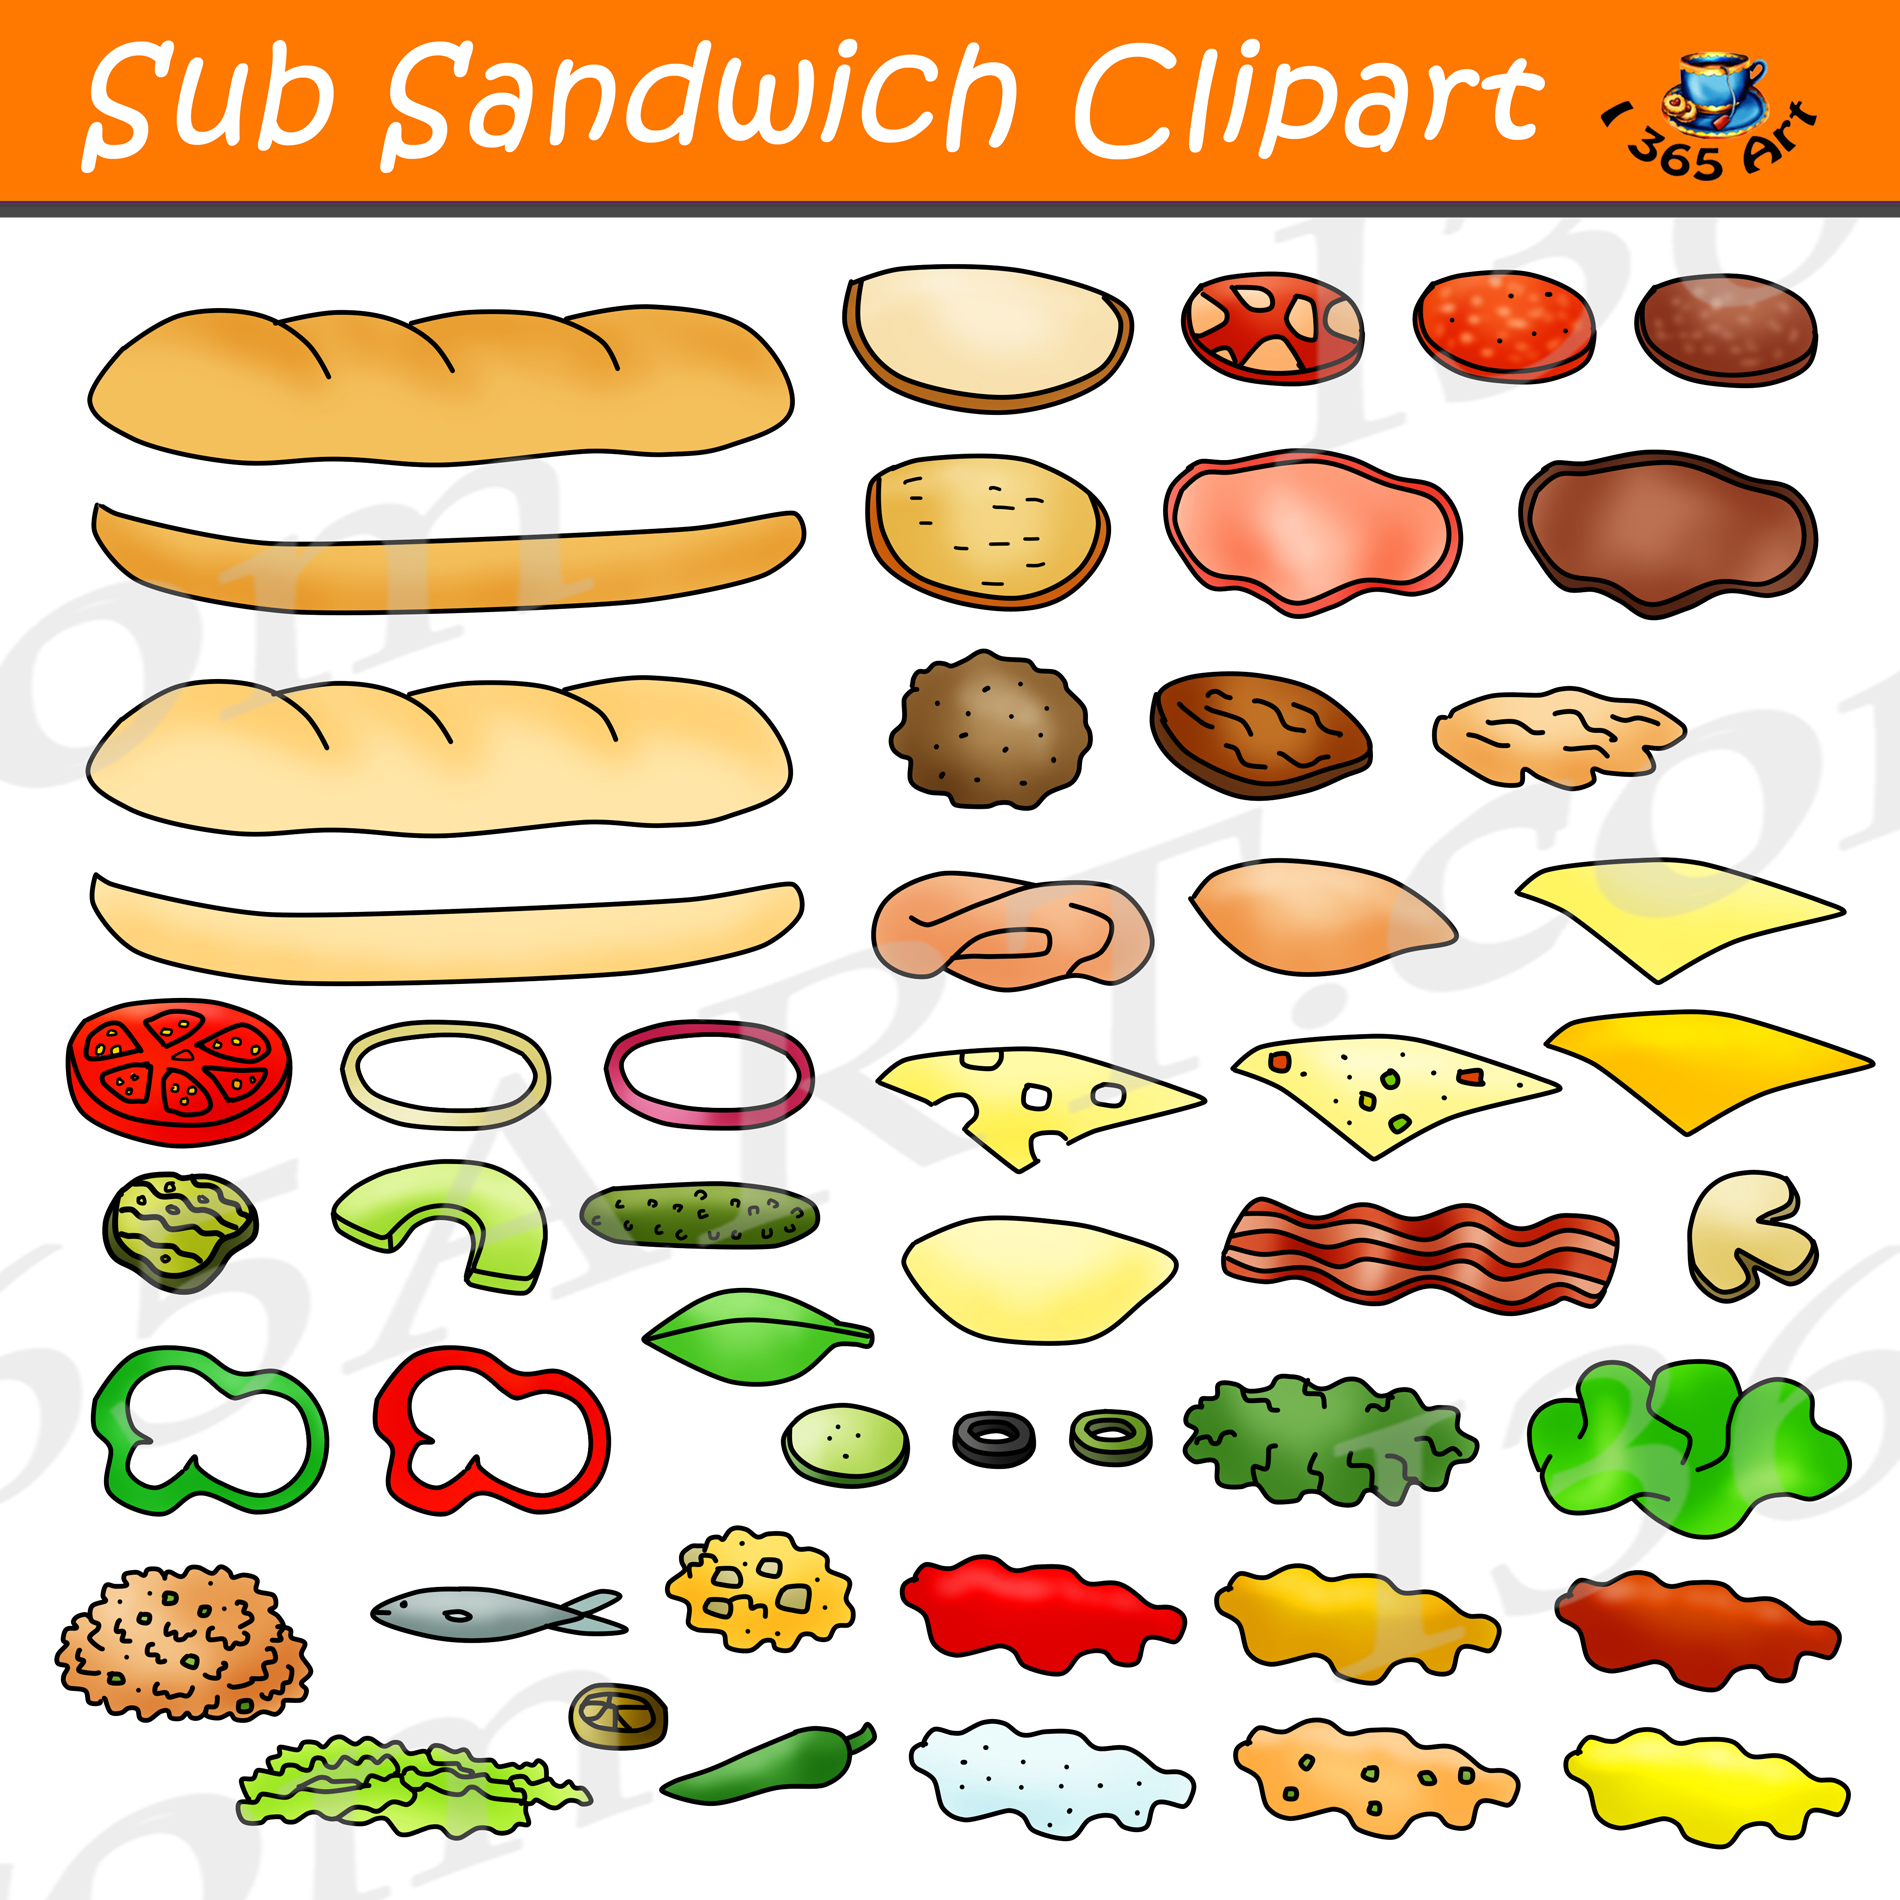 Build sub sandwich.